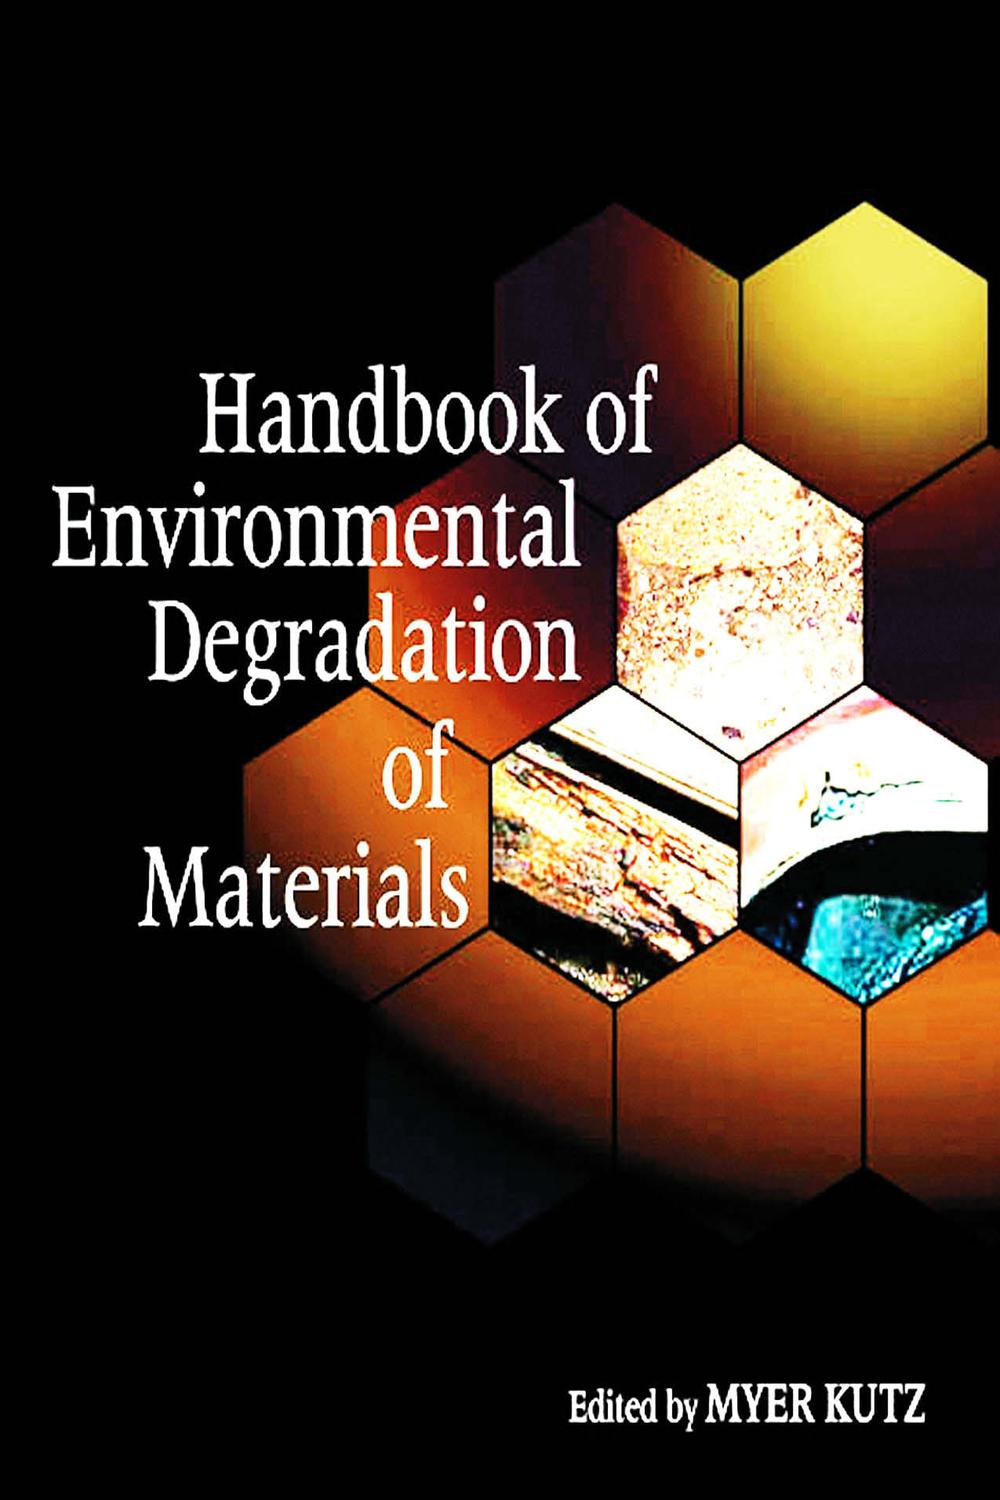 Handbook of Environmental Degradation of Materials - Myer Kutz, Myer Kutz